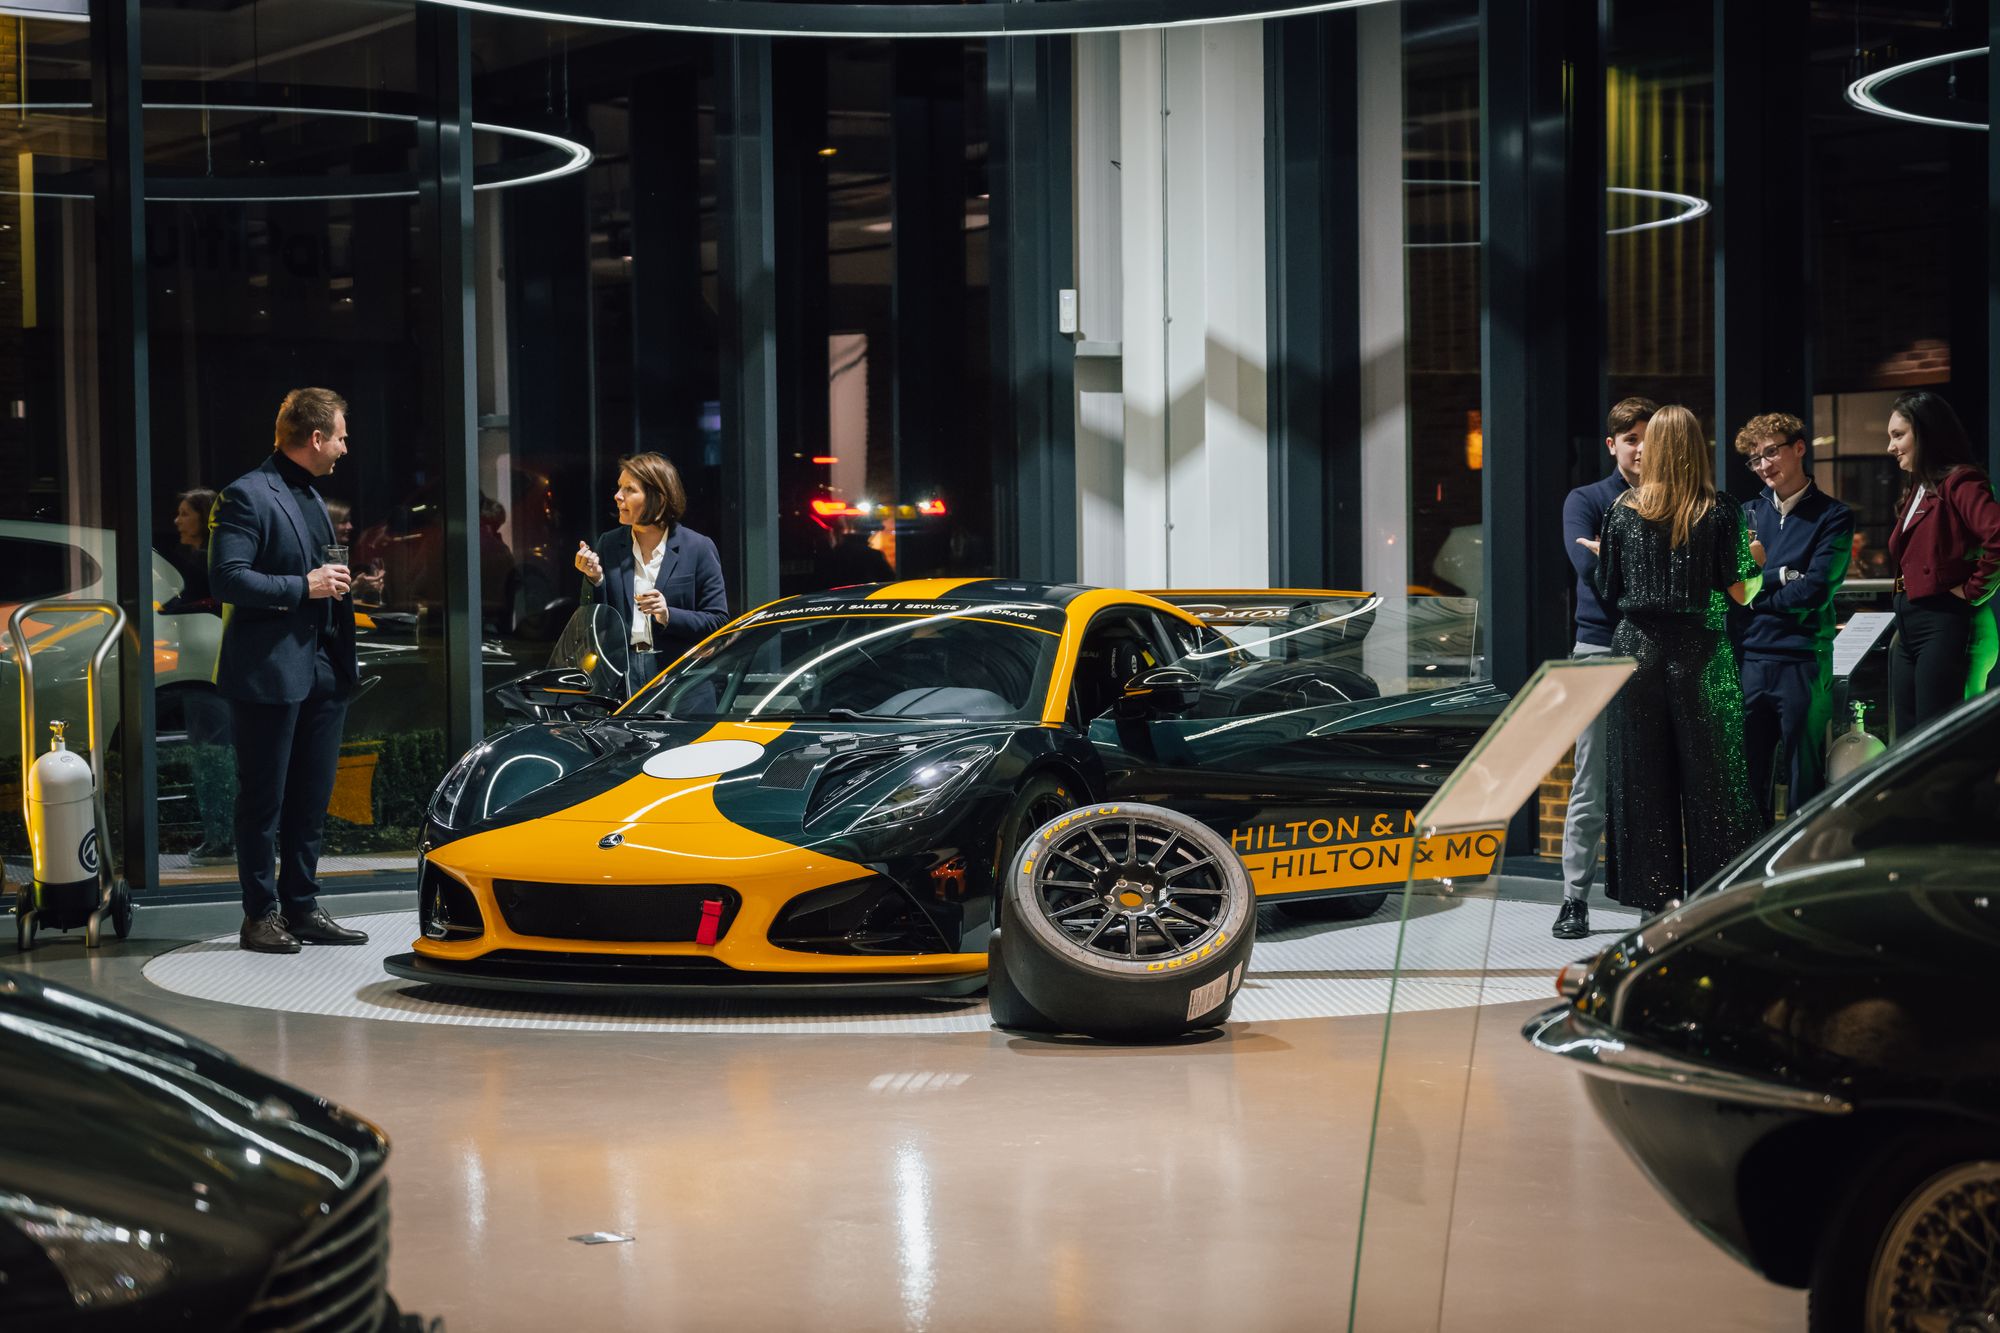 Hilton & Moss reveal their new Lotus Emira GT4 race car